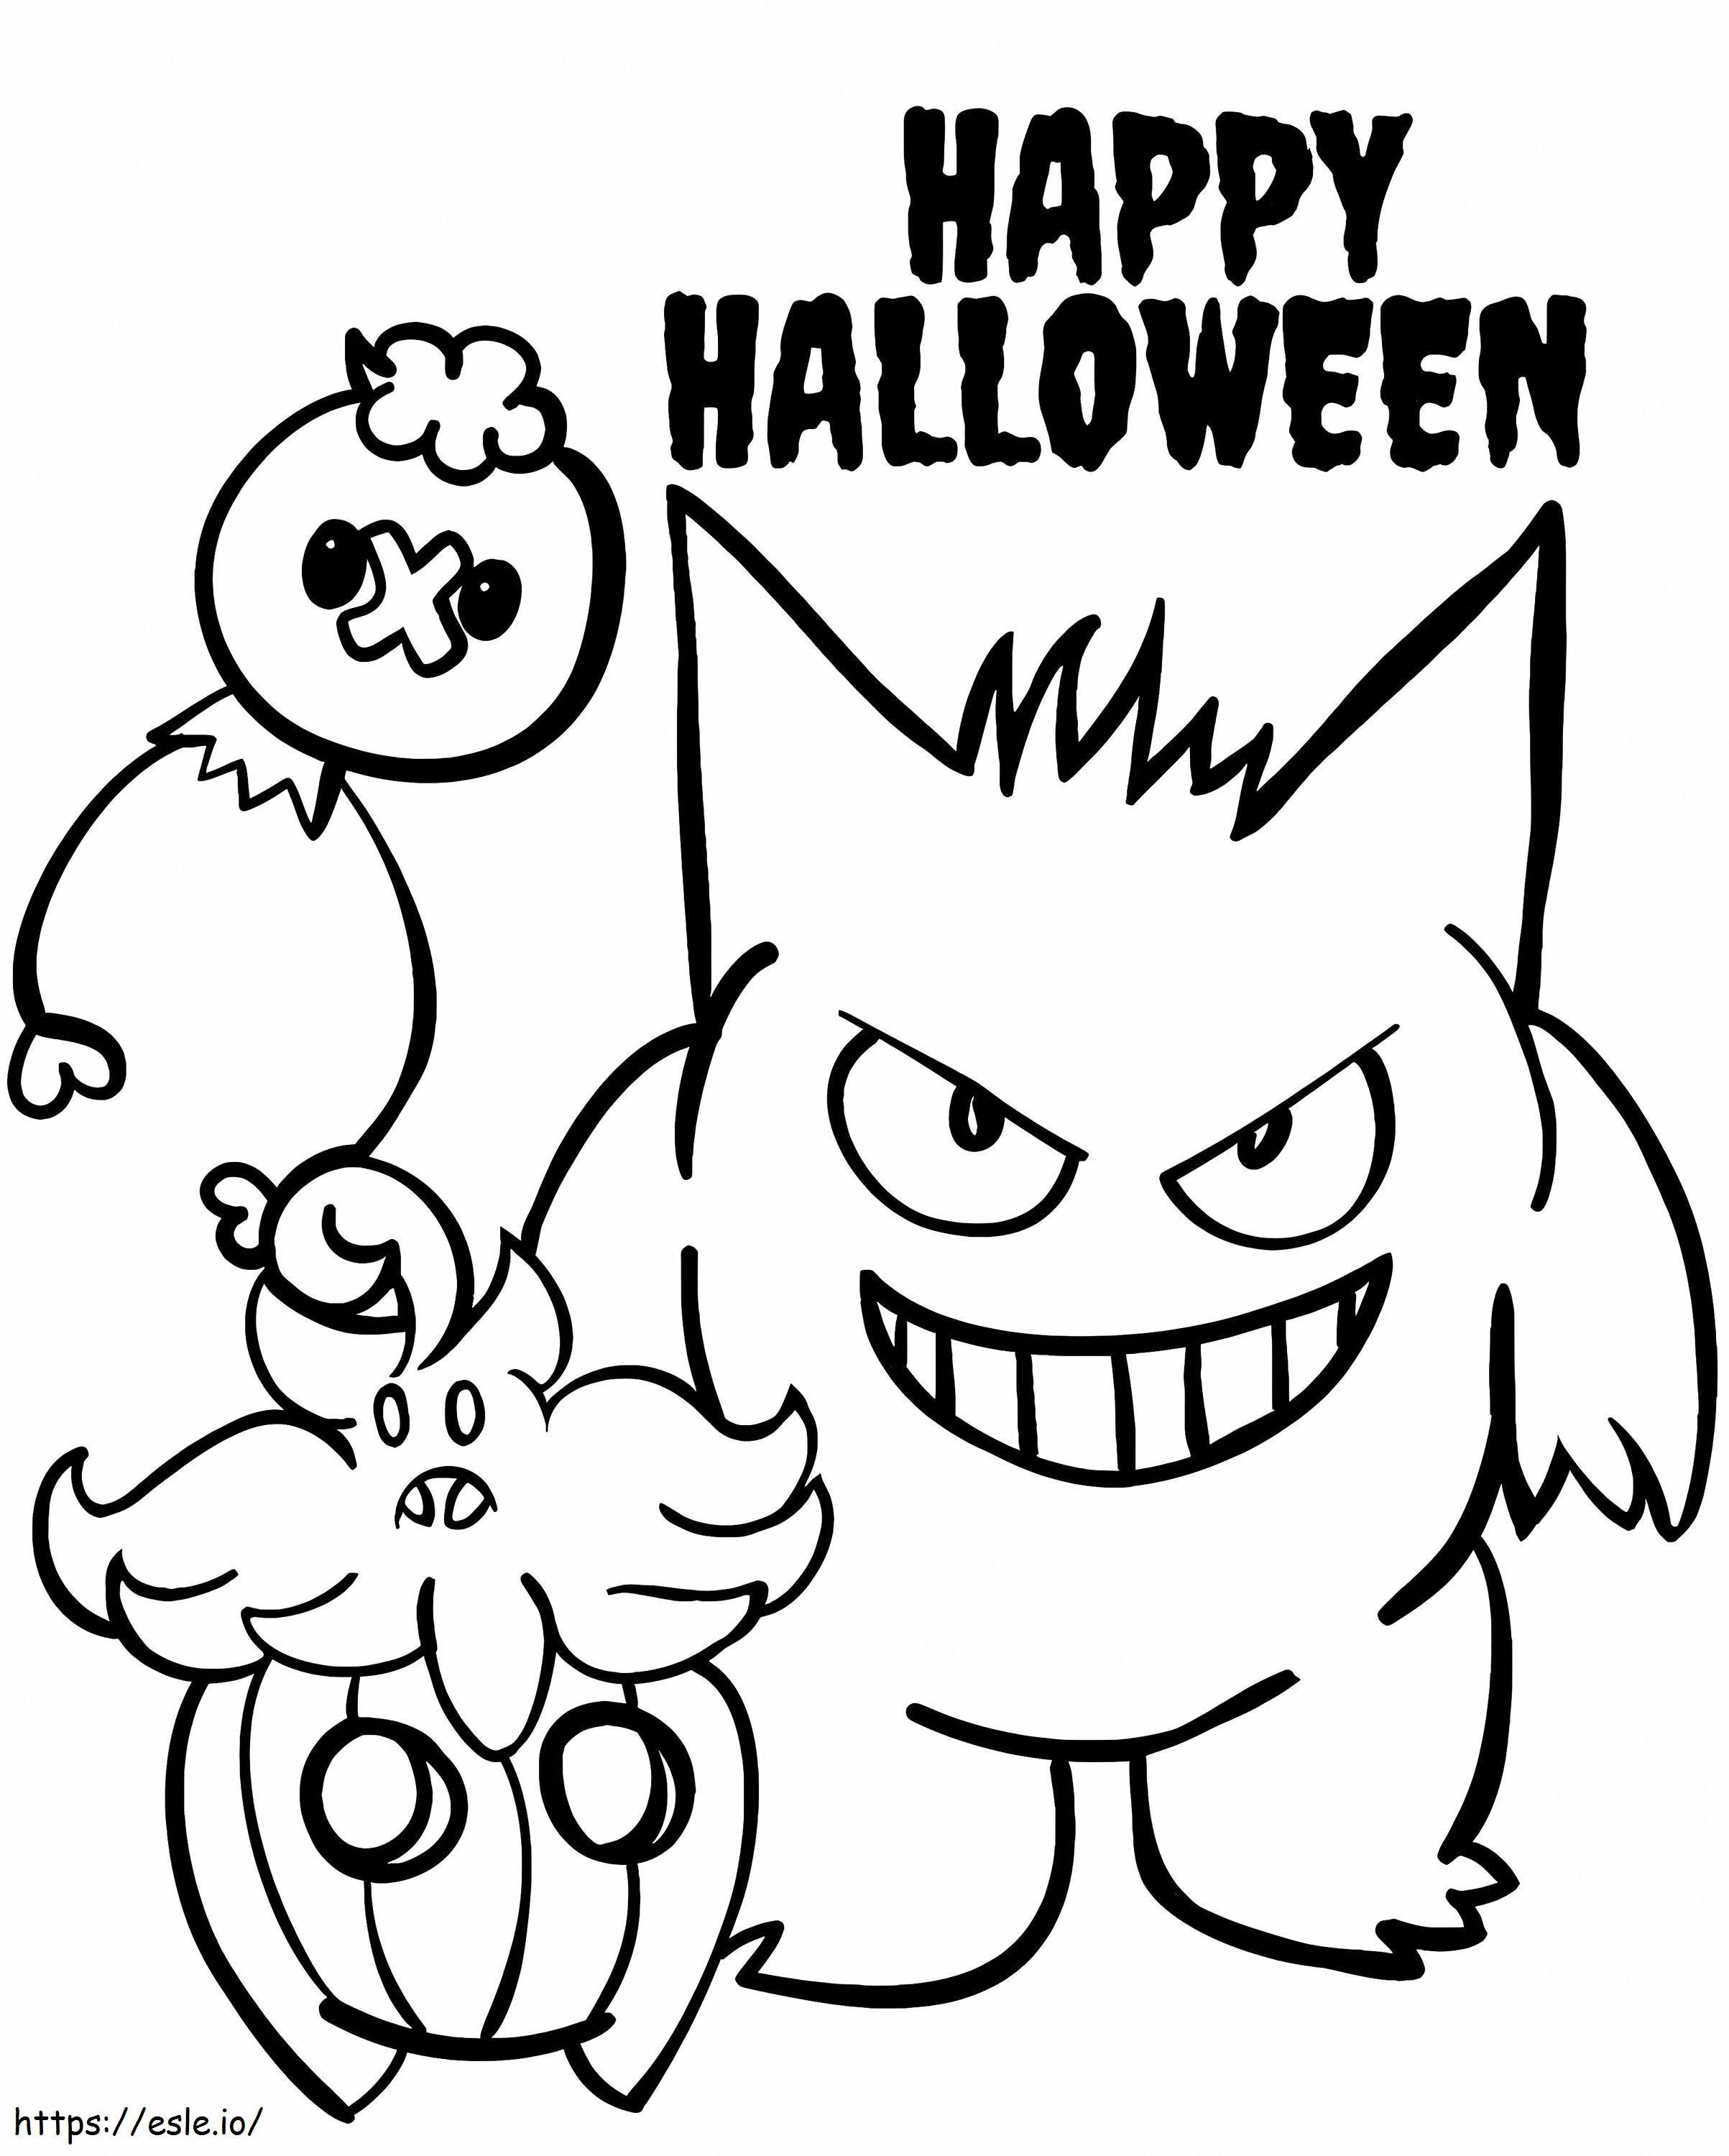 Wydrukuj Pokemon Halloween kolorowanka